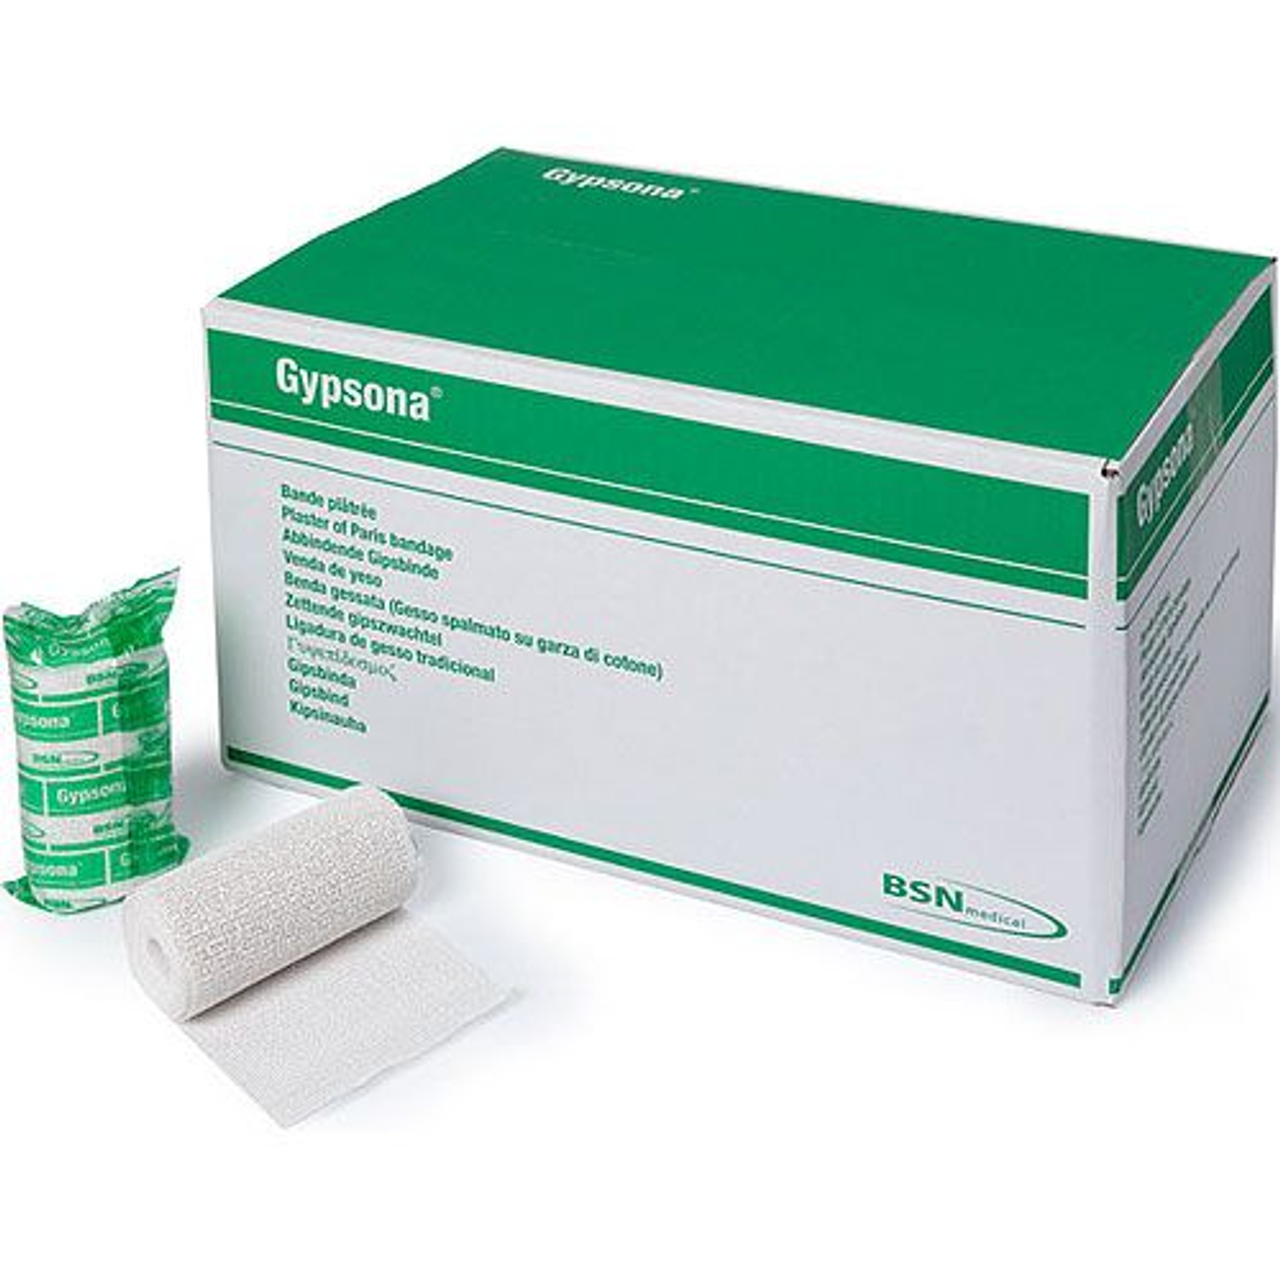 Nutramax LPL Gypsona S Plaster Bandages, Splints, 5 x 30, 50